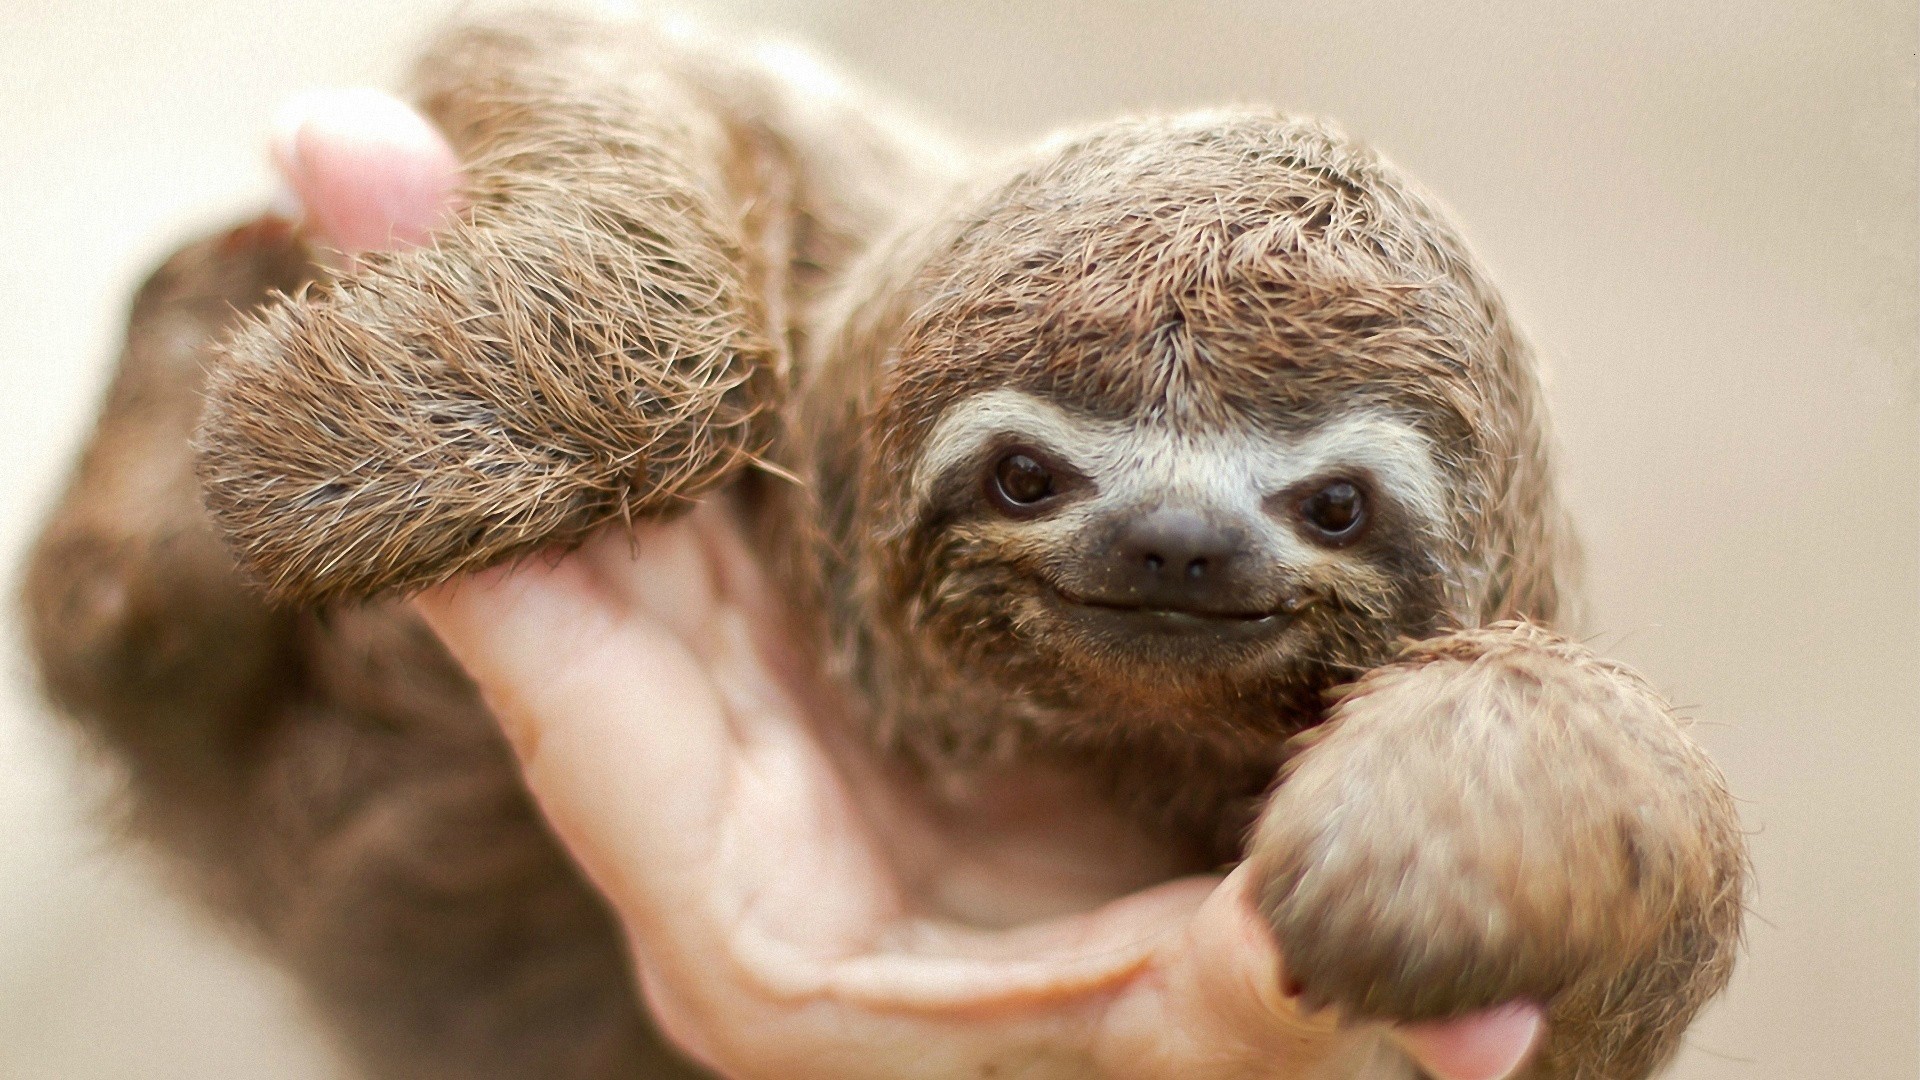 1920x1080 Baby sloth - Sloths Photo (36191129) - Fanpop fanclubs